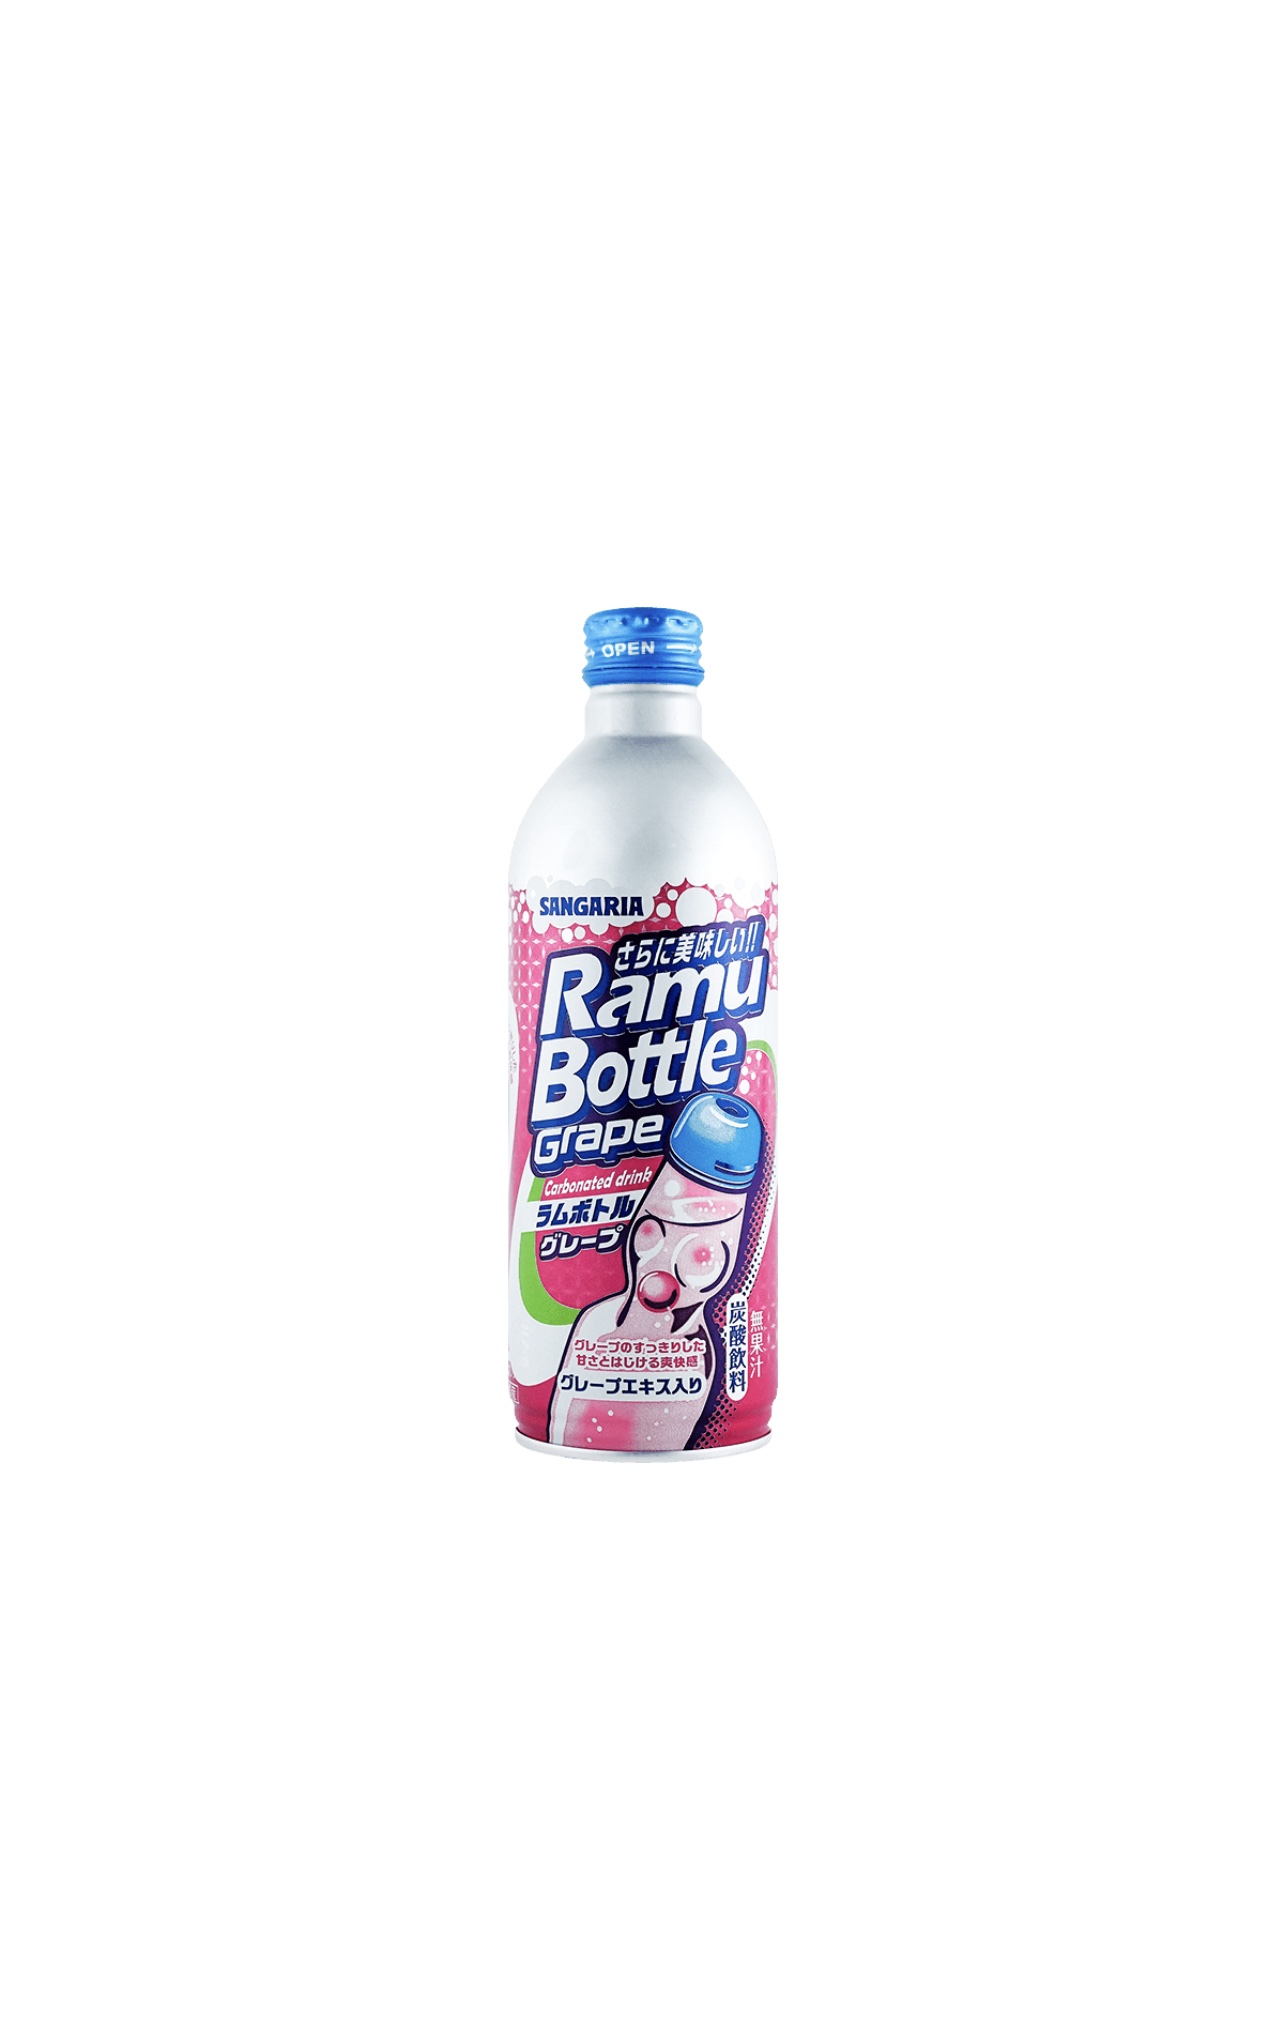 SANGARIA Ramu Bottle Grape Flavor